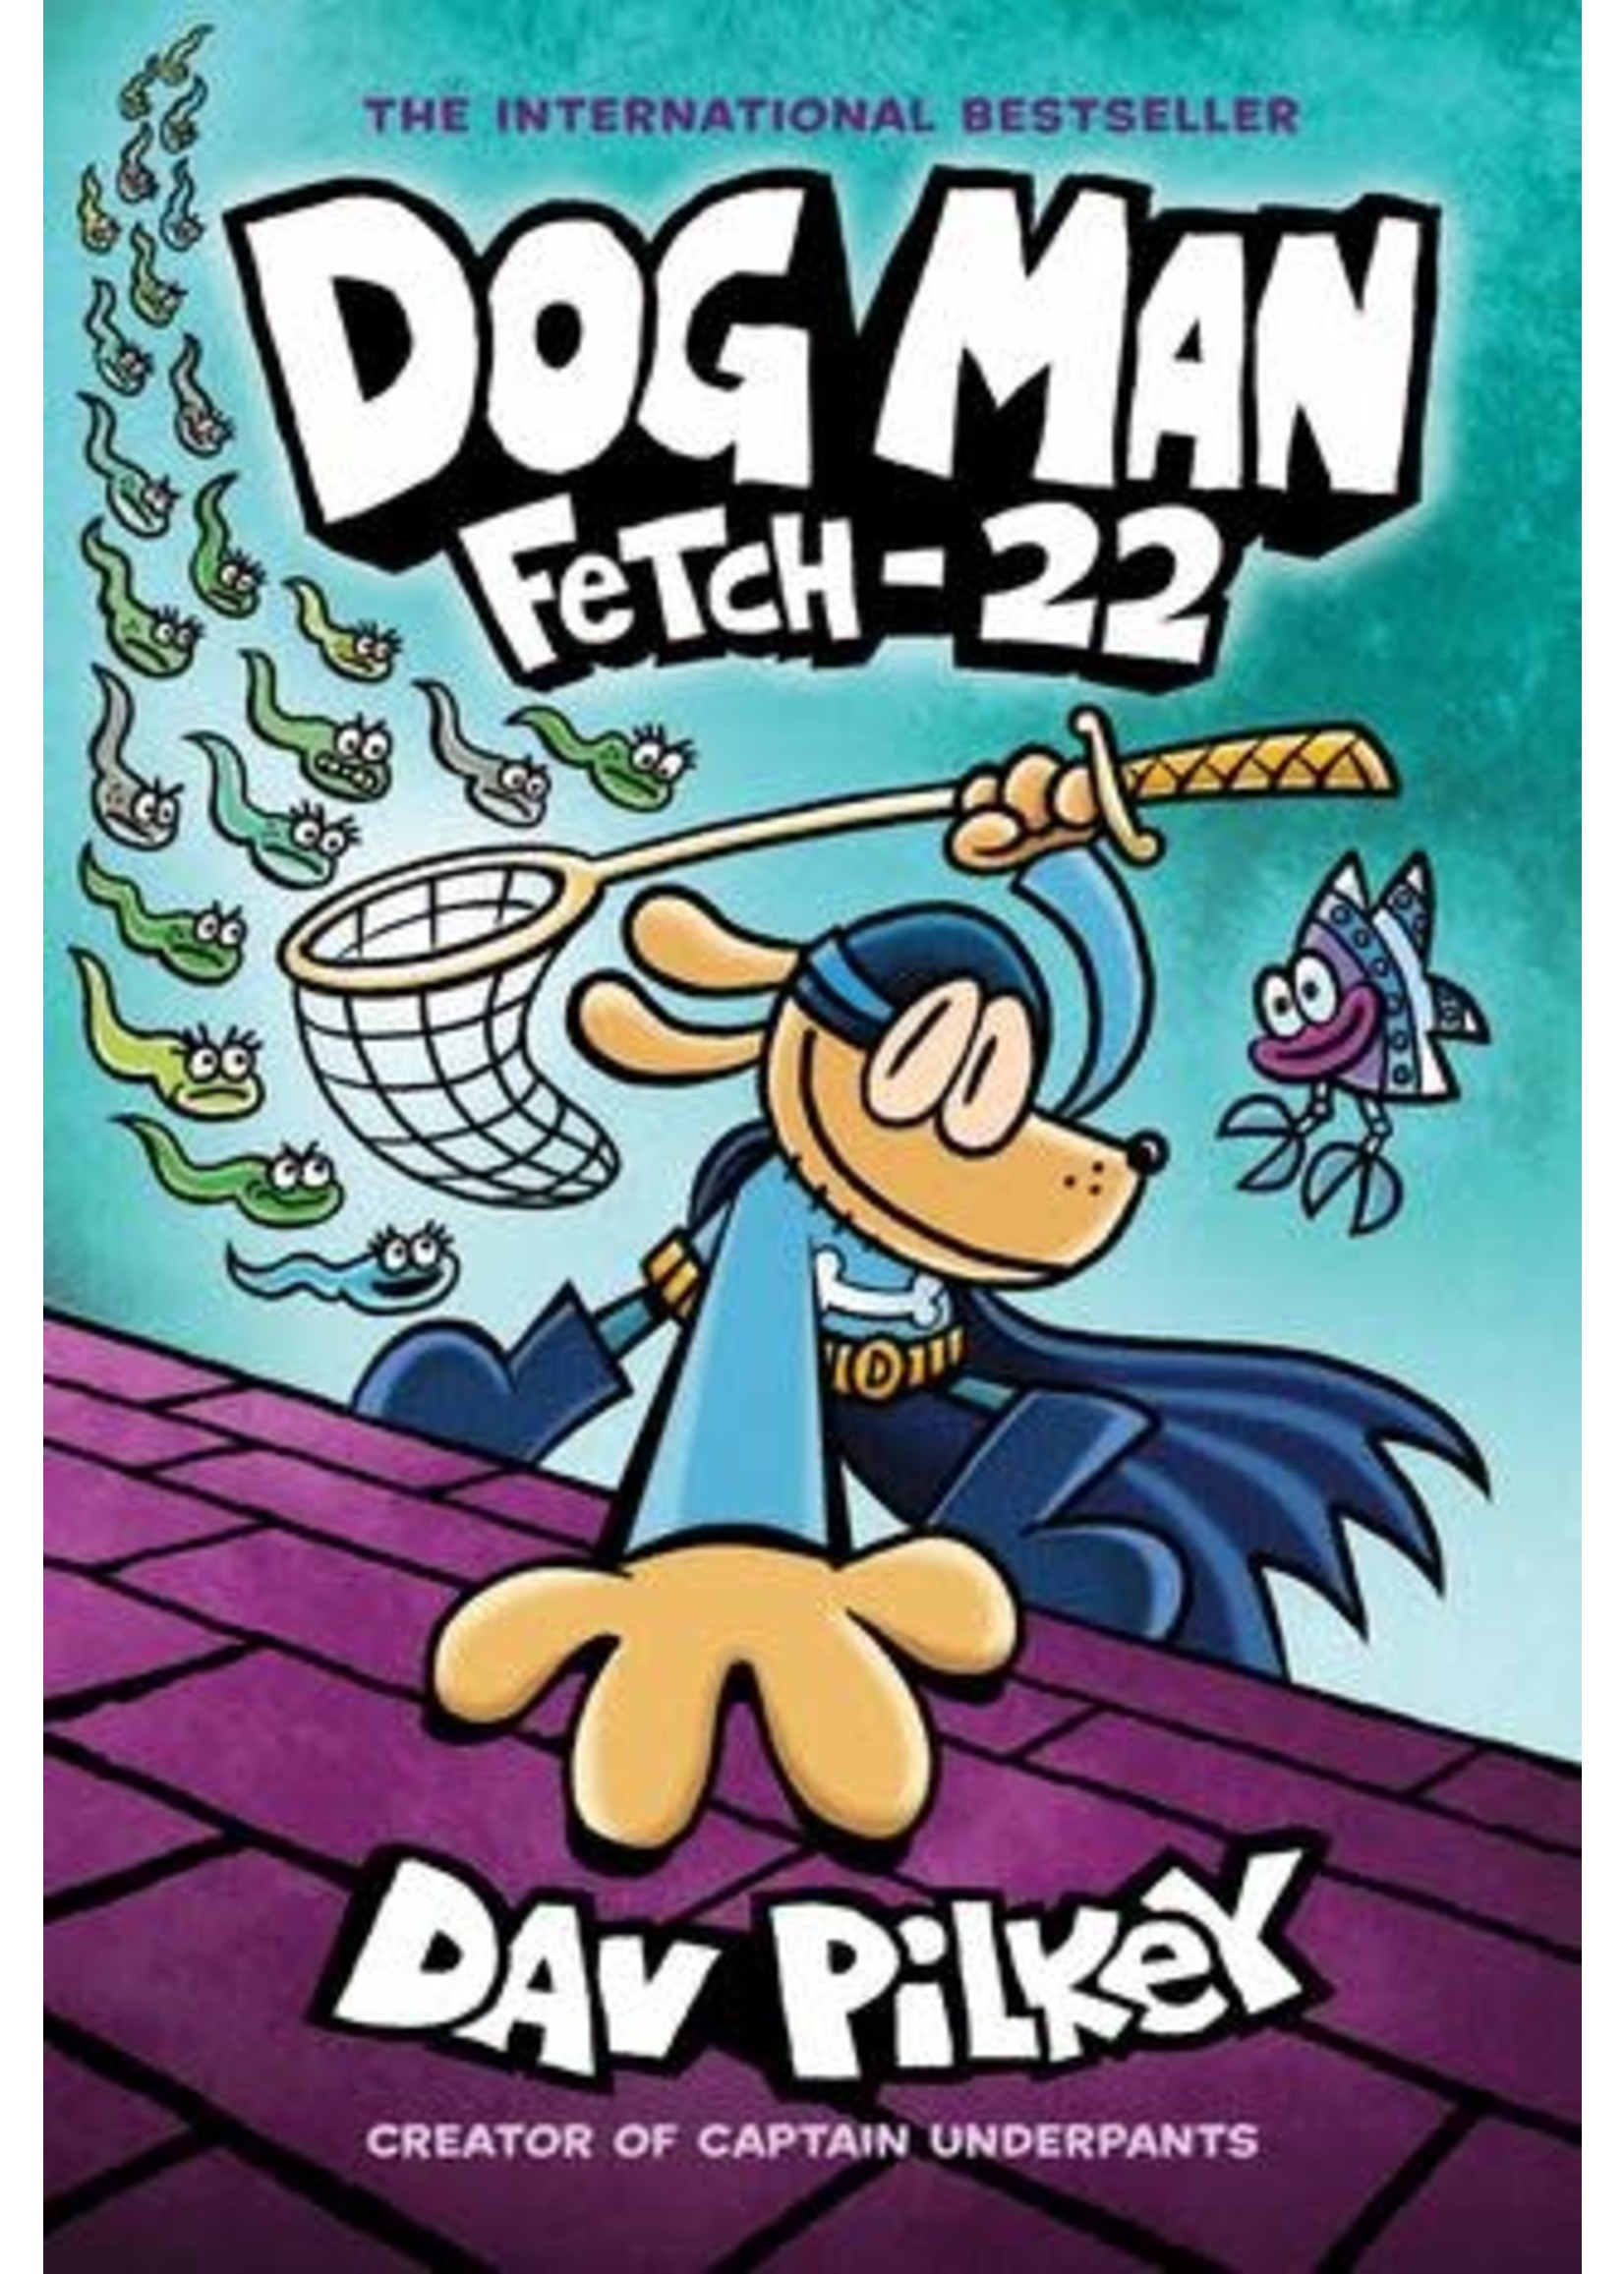 Fetch-22 (Dog Man #8) by Dav Pilkey